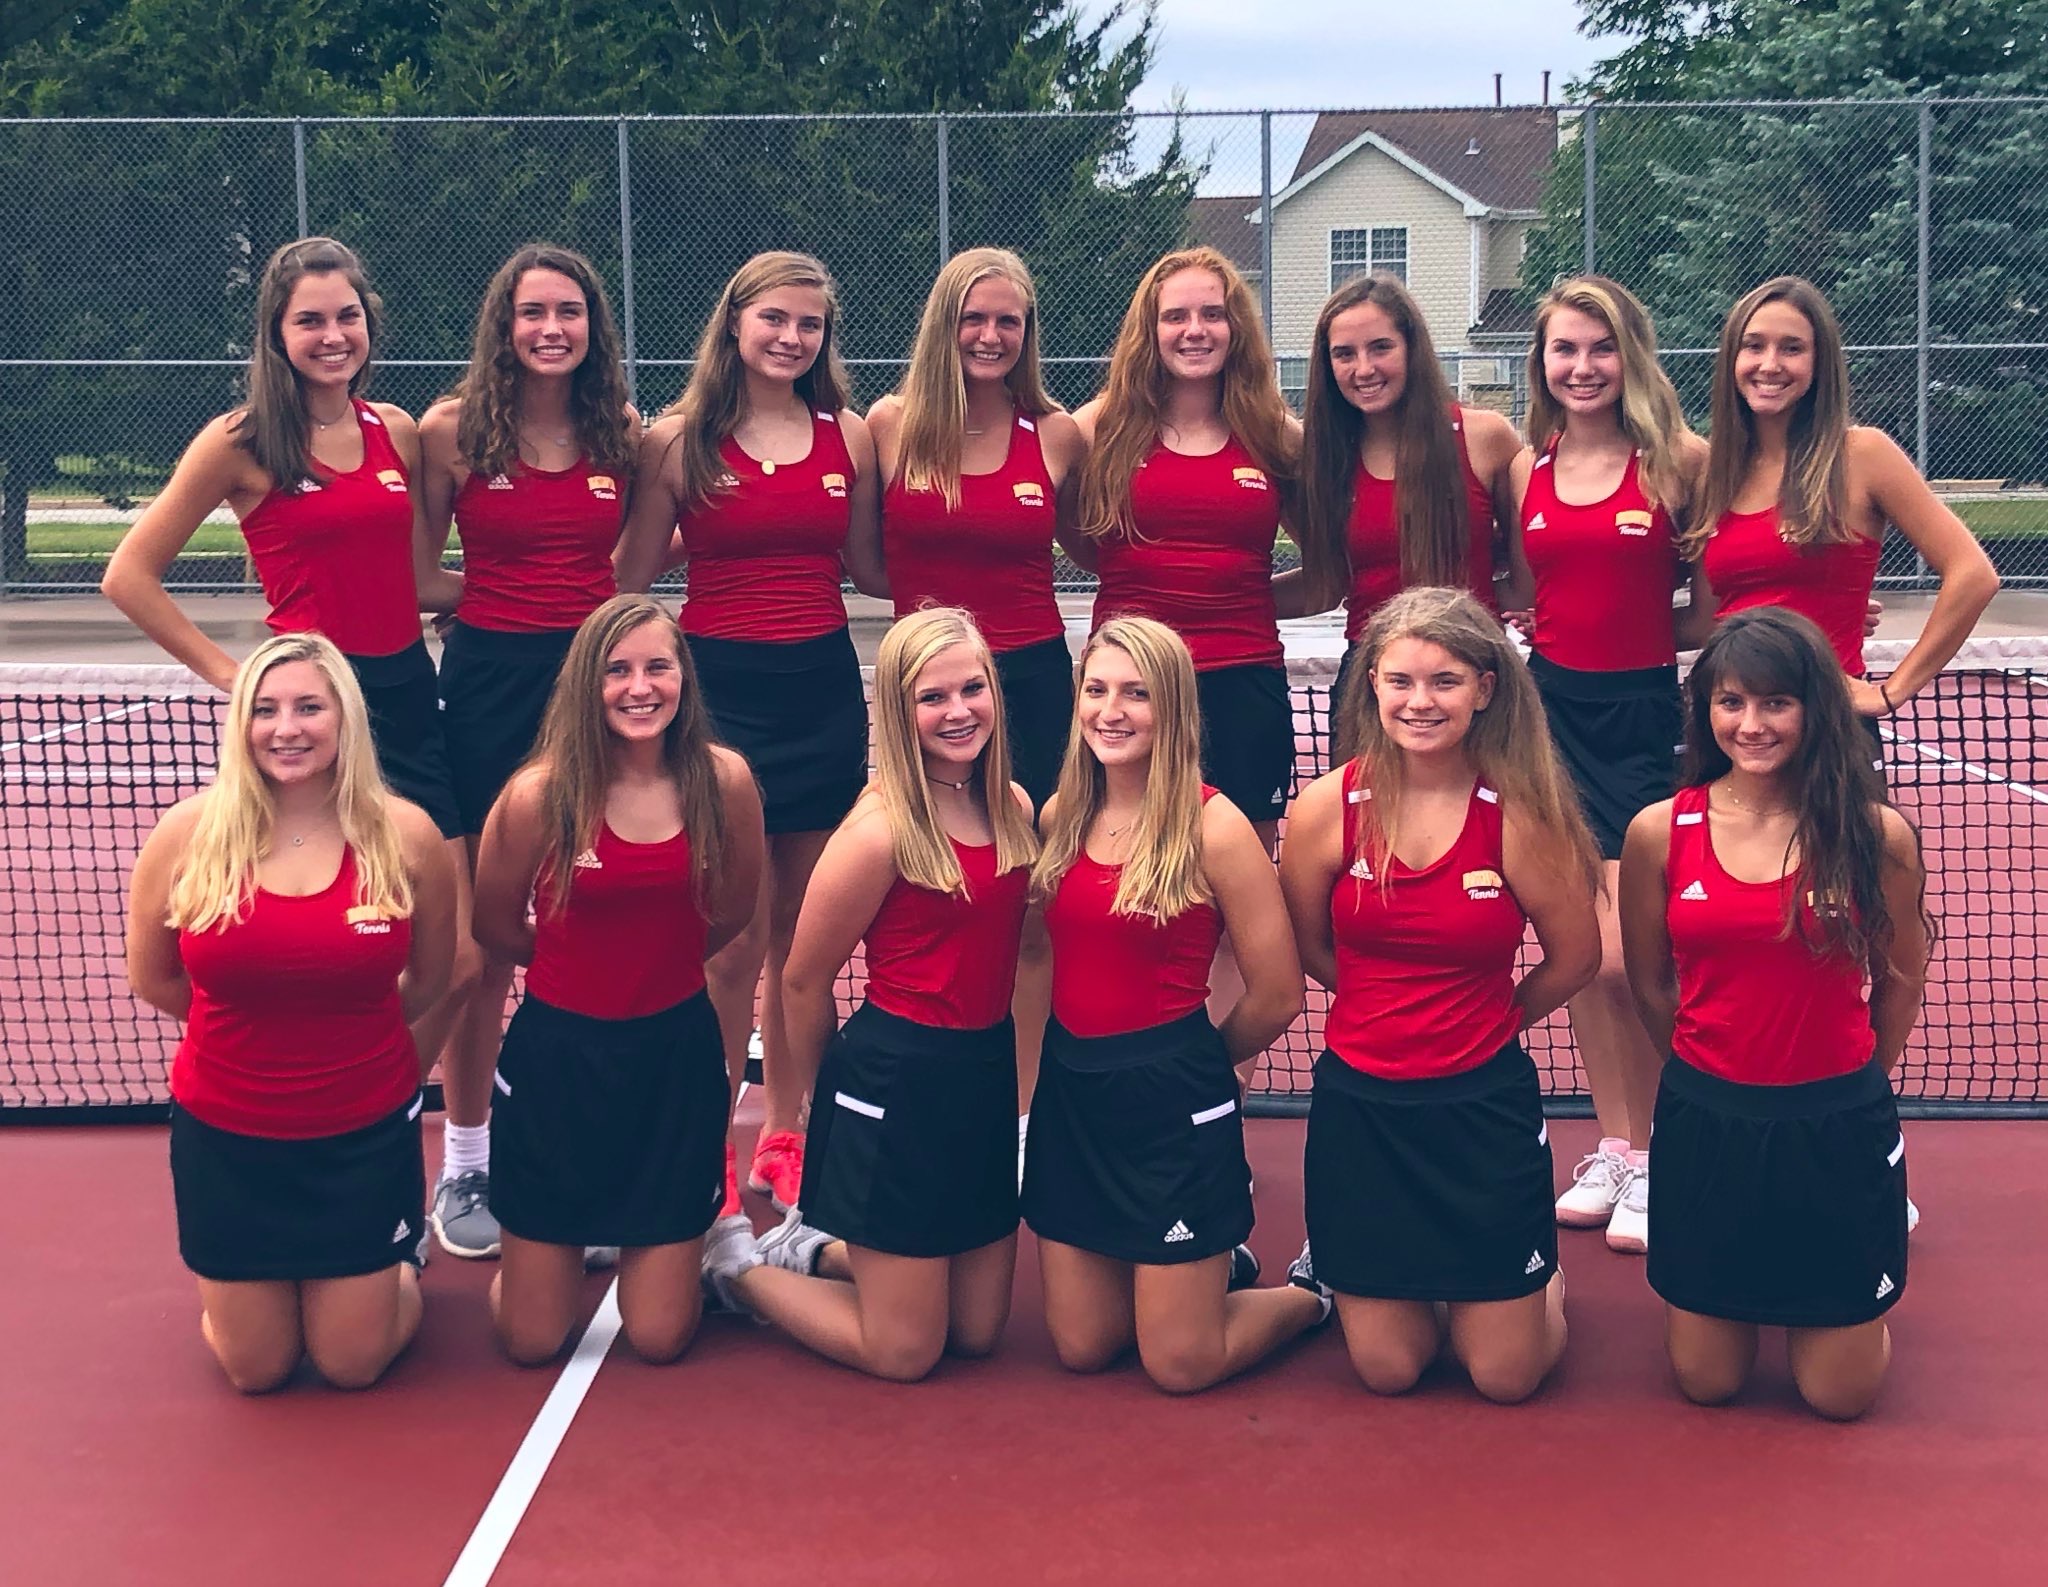 Carroll University committed Ostrander recapping the 2019 girls’ varsity tennis season